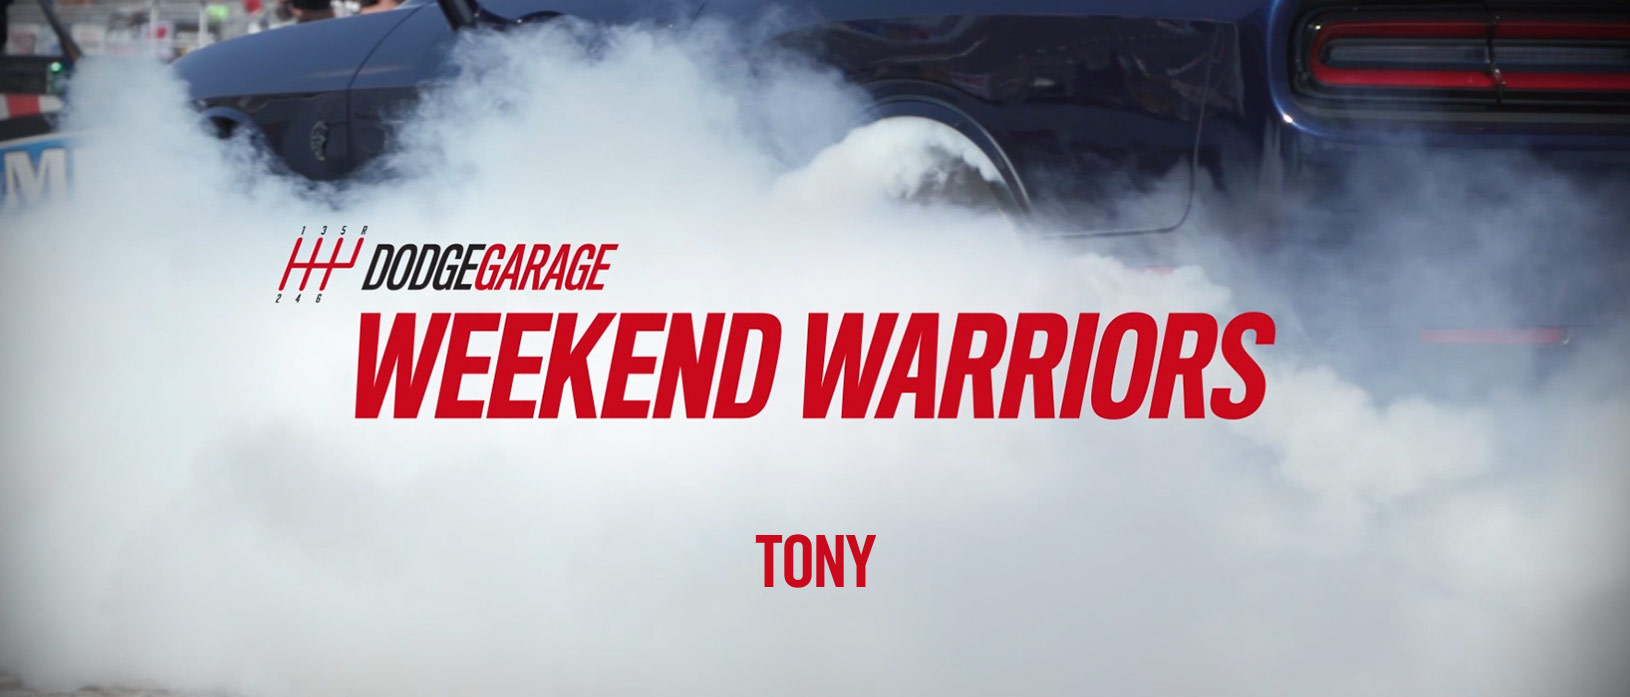 Weekend Warriors Tony